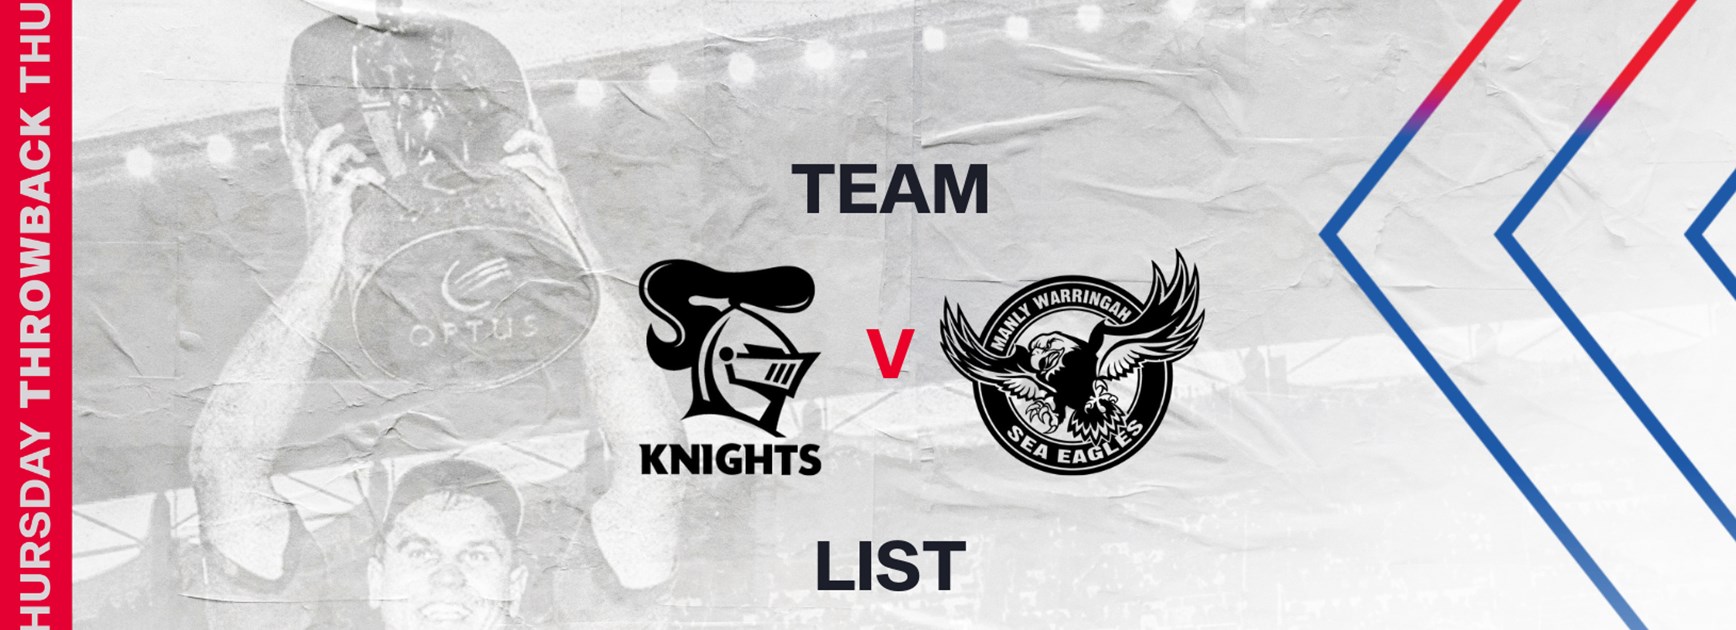 Knights v Sea Eagles Round 5 NRL team list